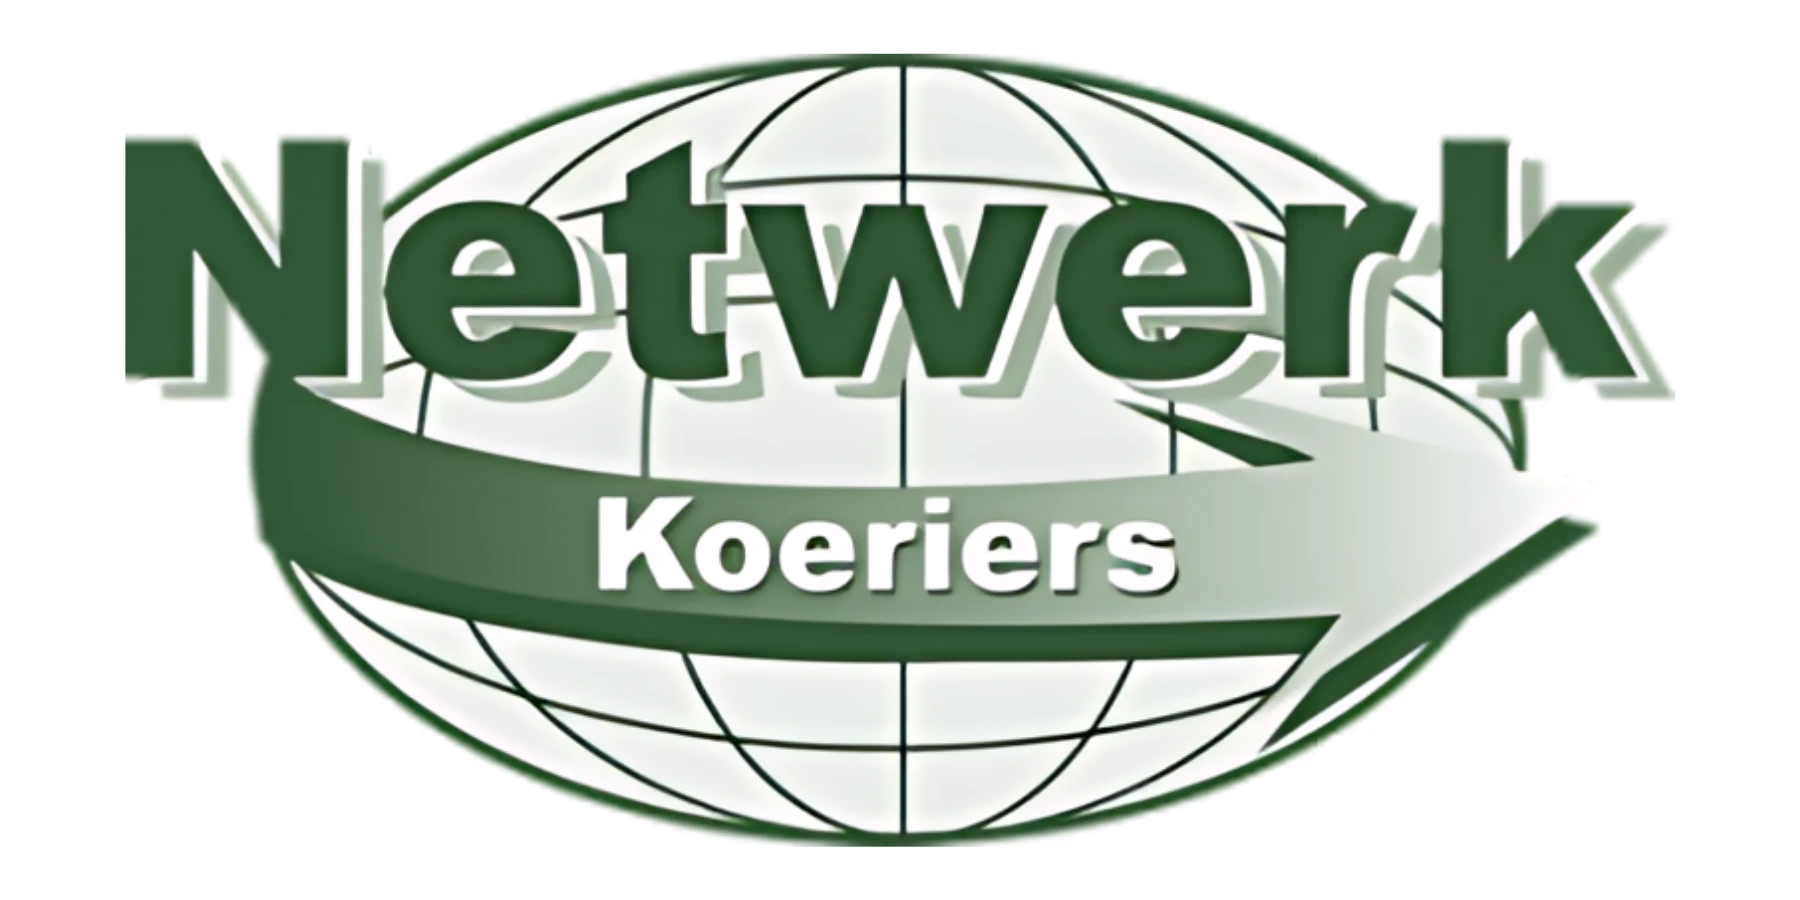 Netwerk Koeriers Cape Town